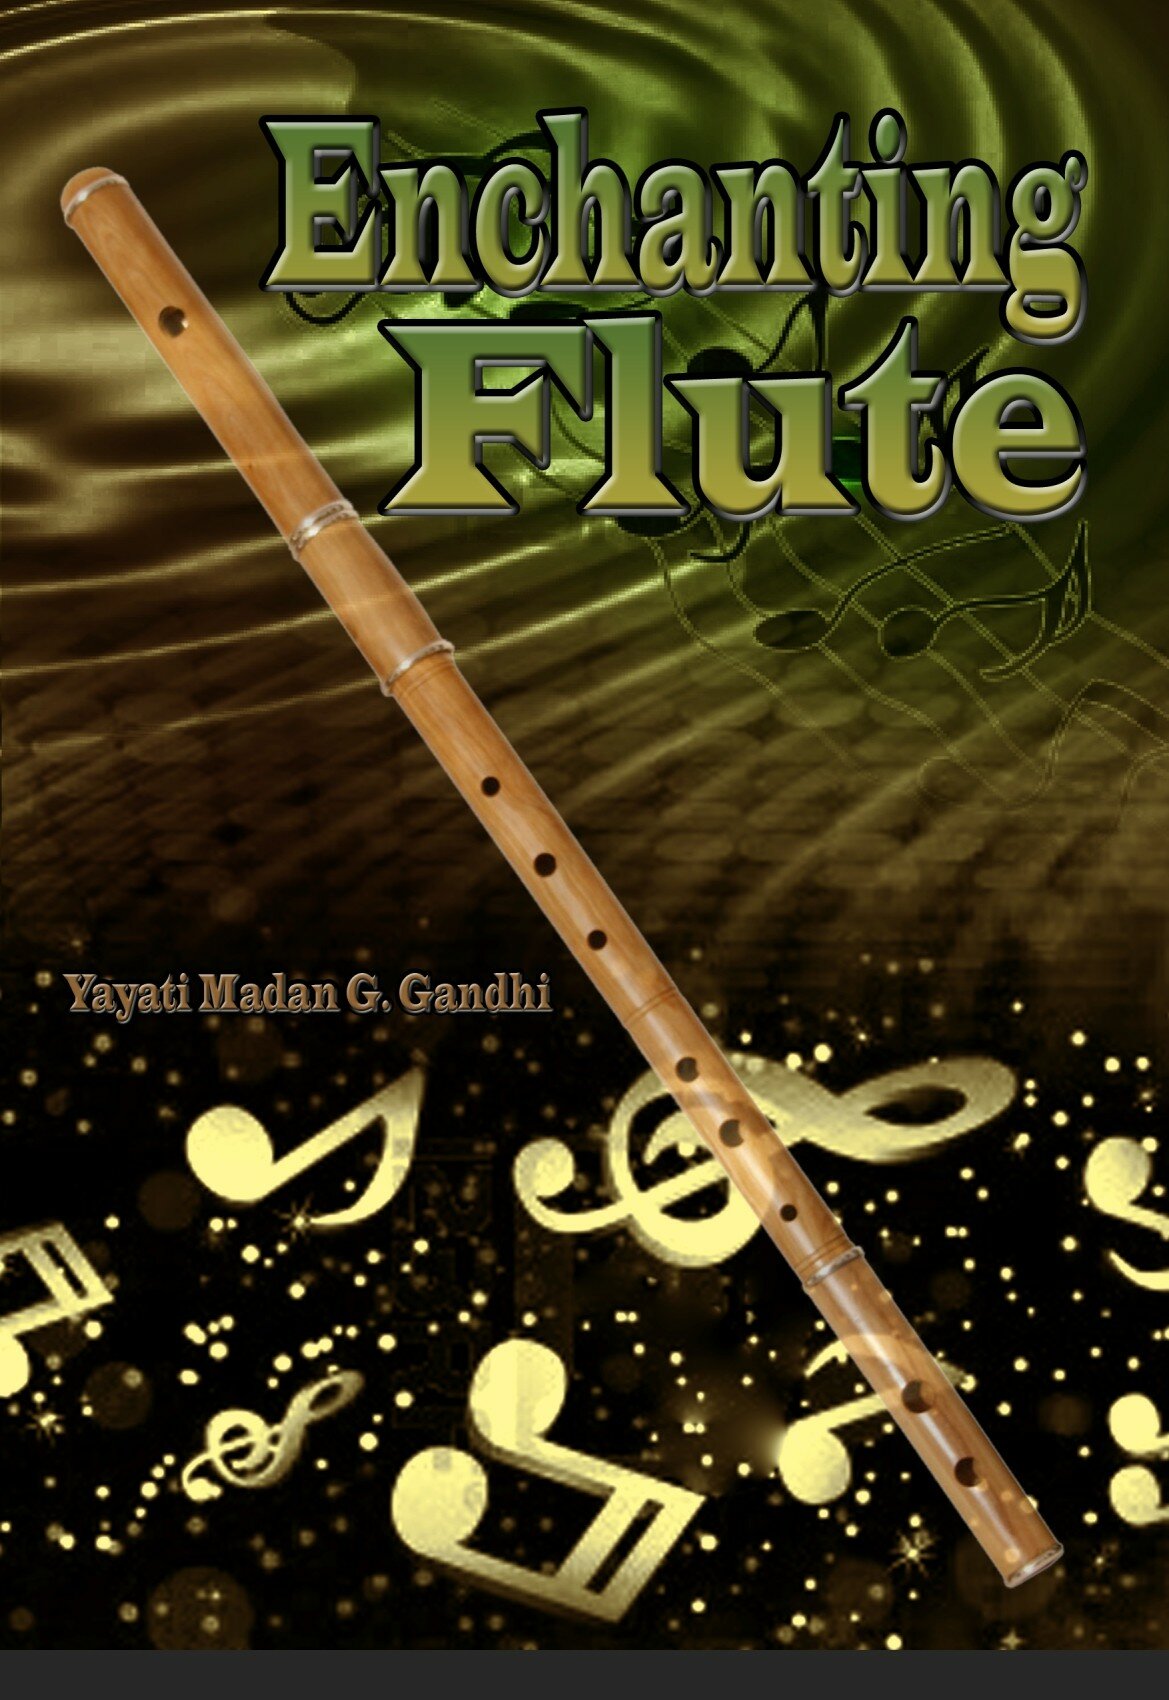 Enchanting Flute